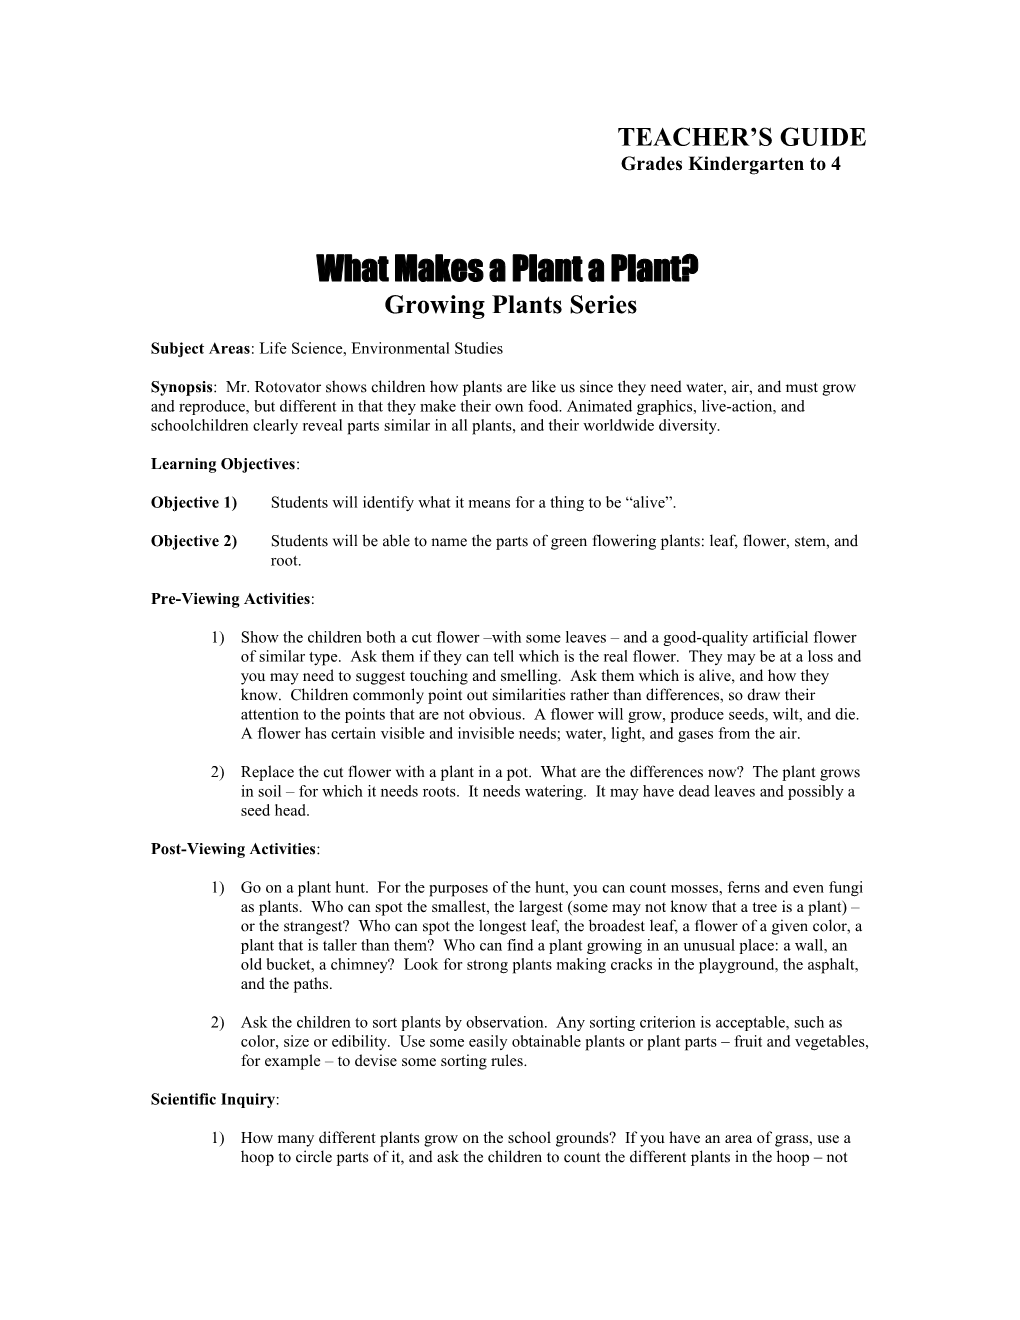 What Makes a Plant a Plant?